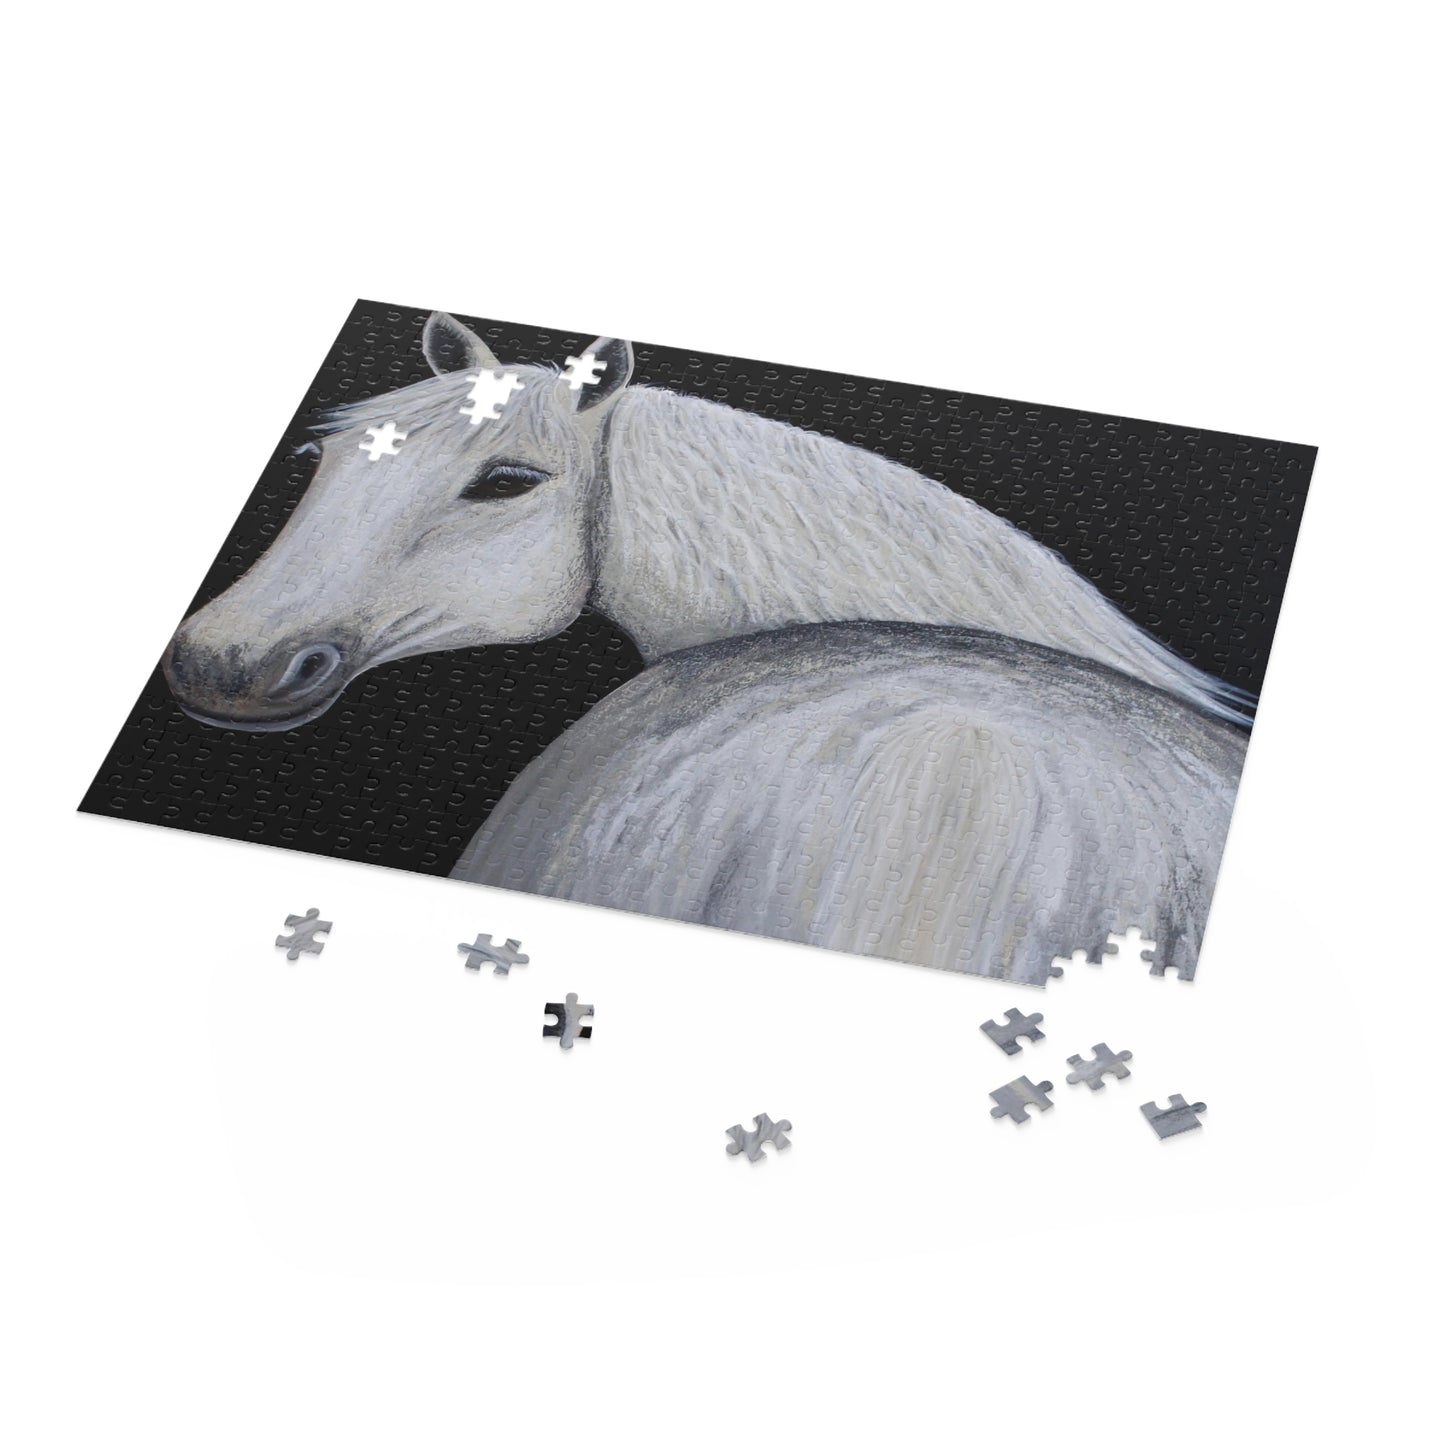 500 piece Jigsaw Puzzle - Horse Puzzle - Ghost Jigsaw - Equestrian Jigsaw